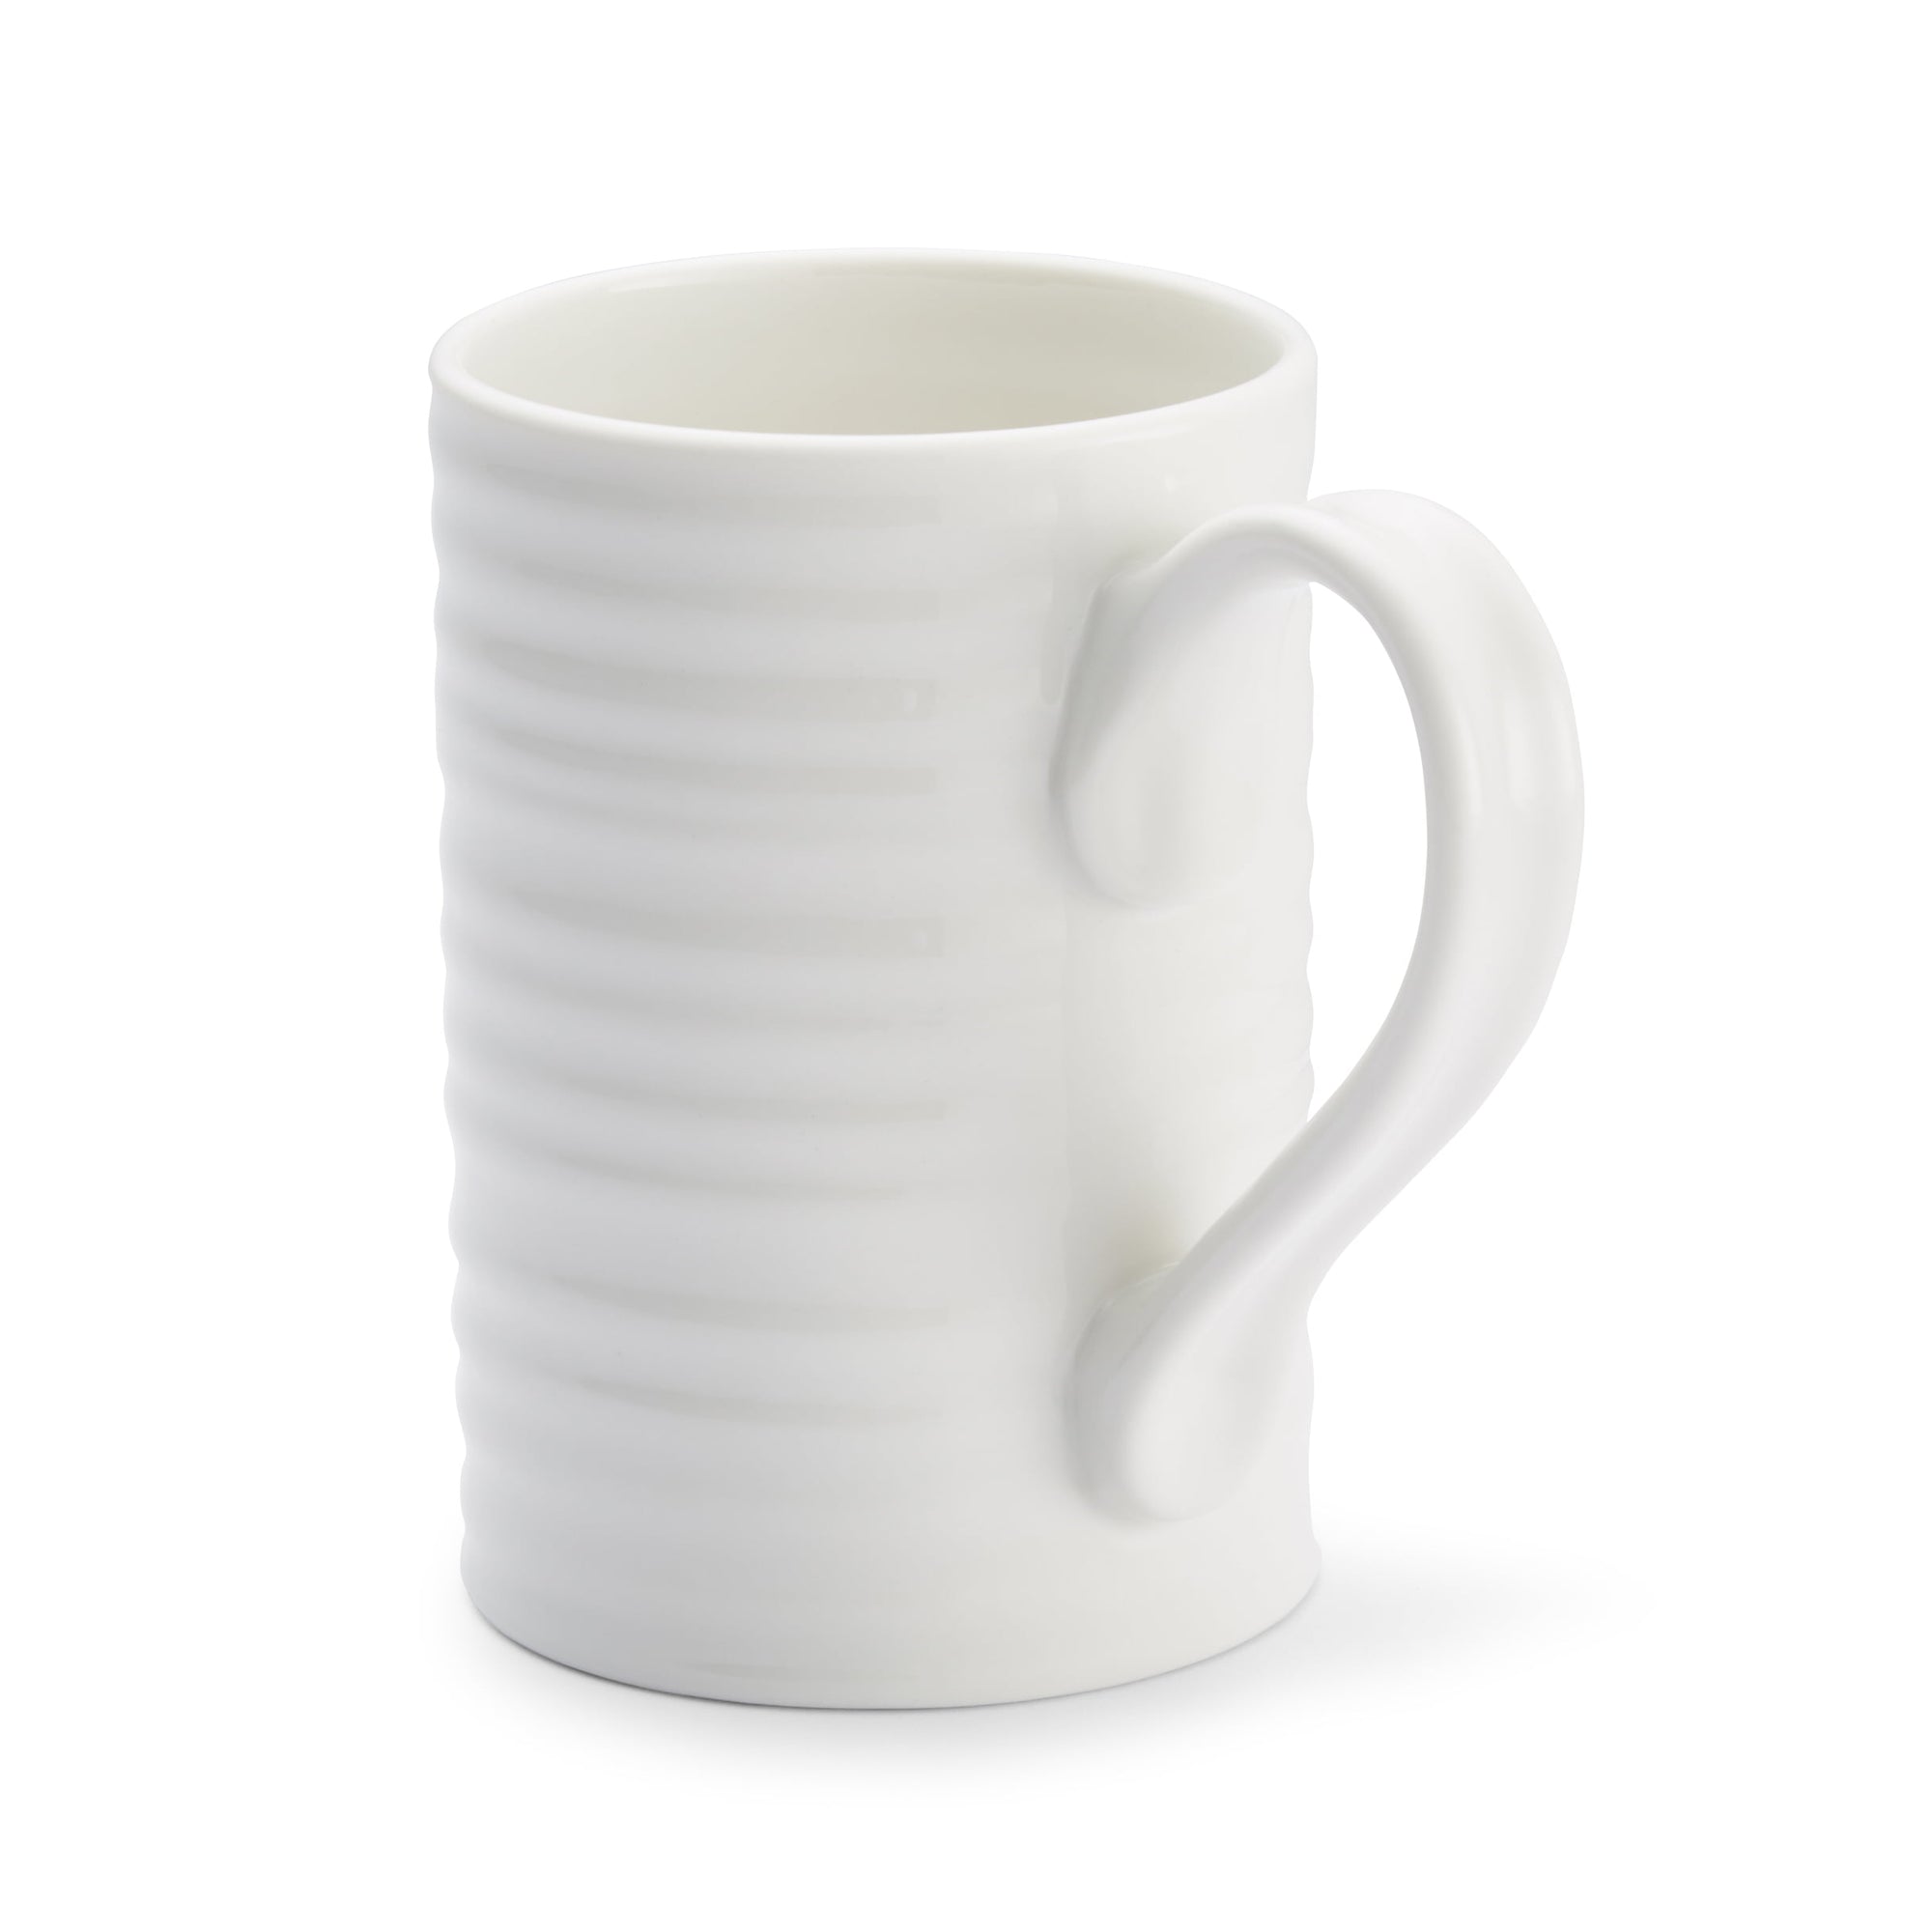 Set of 6 White Classic Mugs